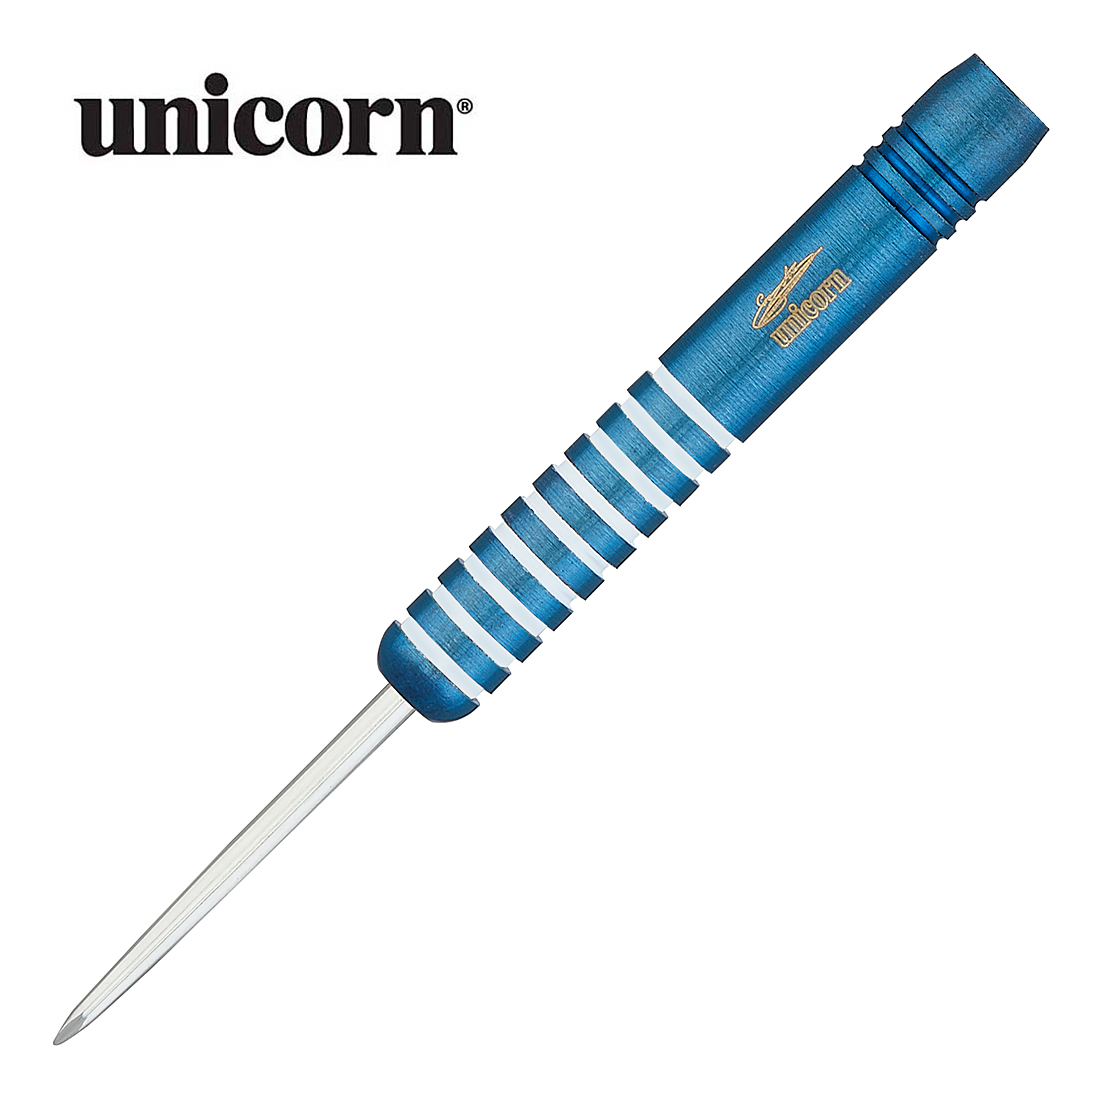 Unicorn Gary Anderson Blue Silver Star 23g Darts: Precision, Performance, and Pedigree